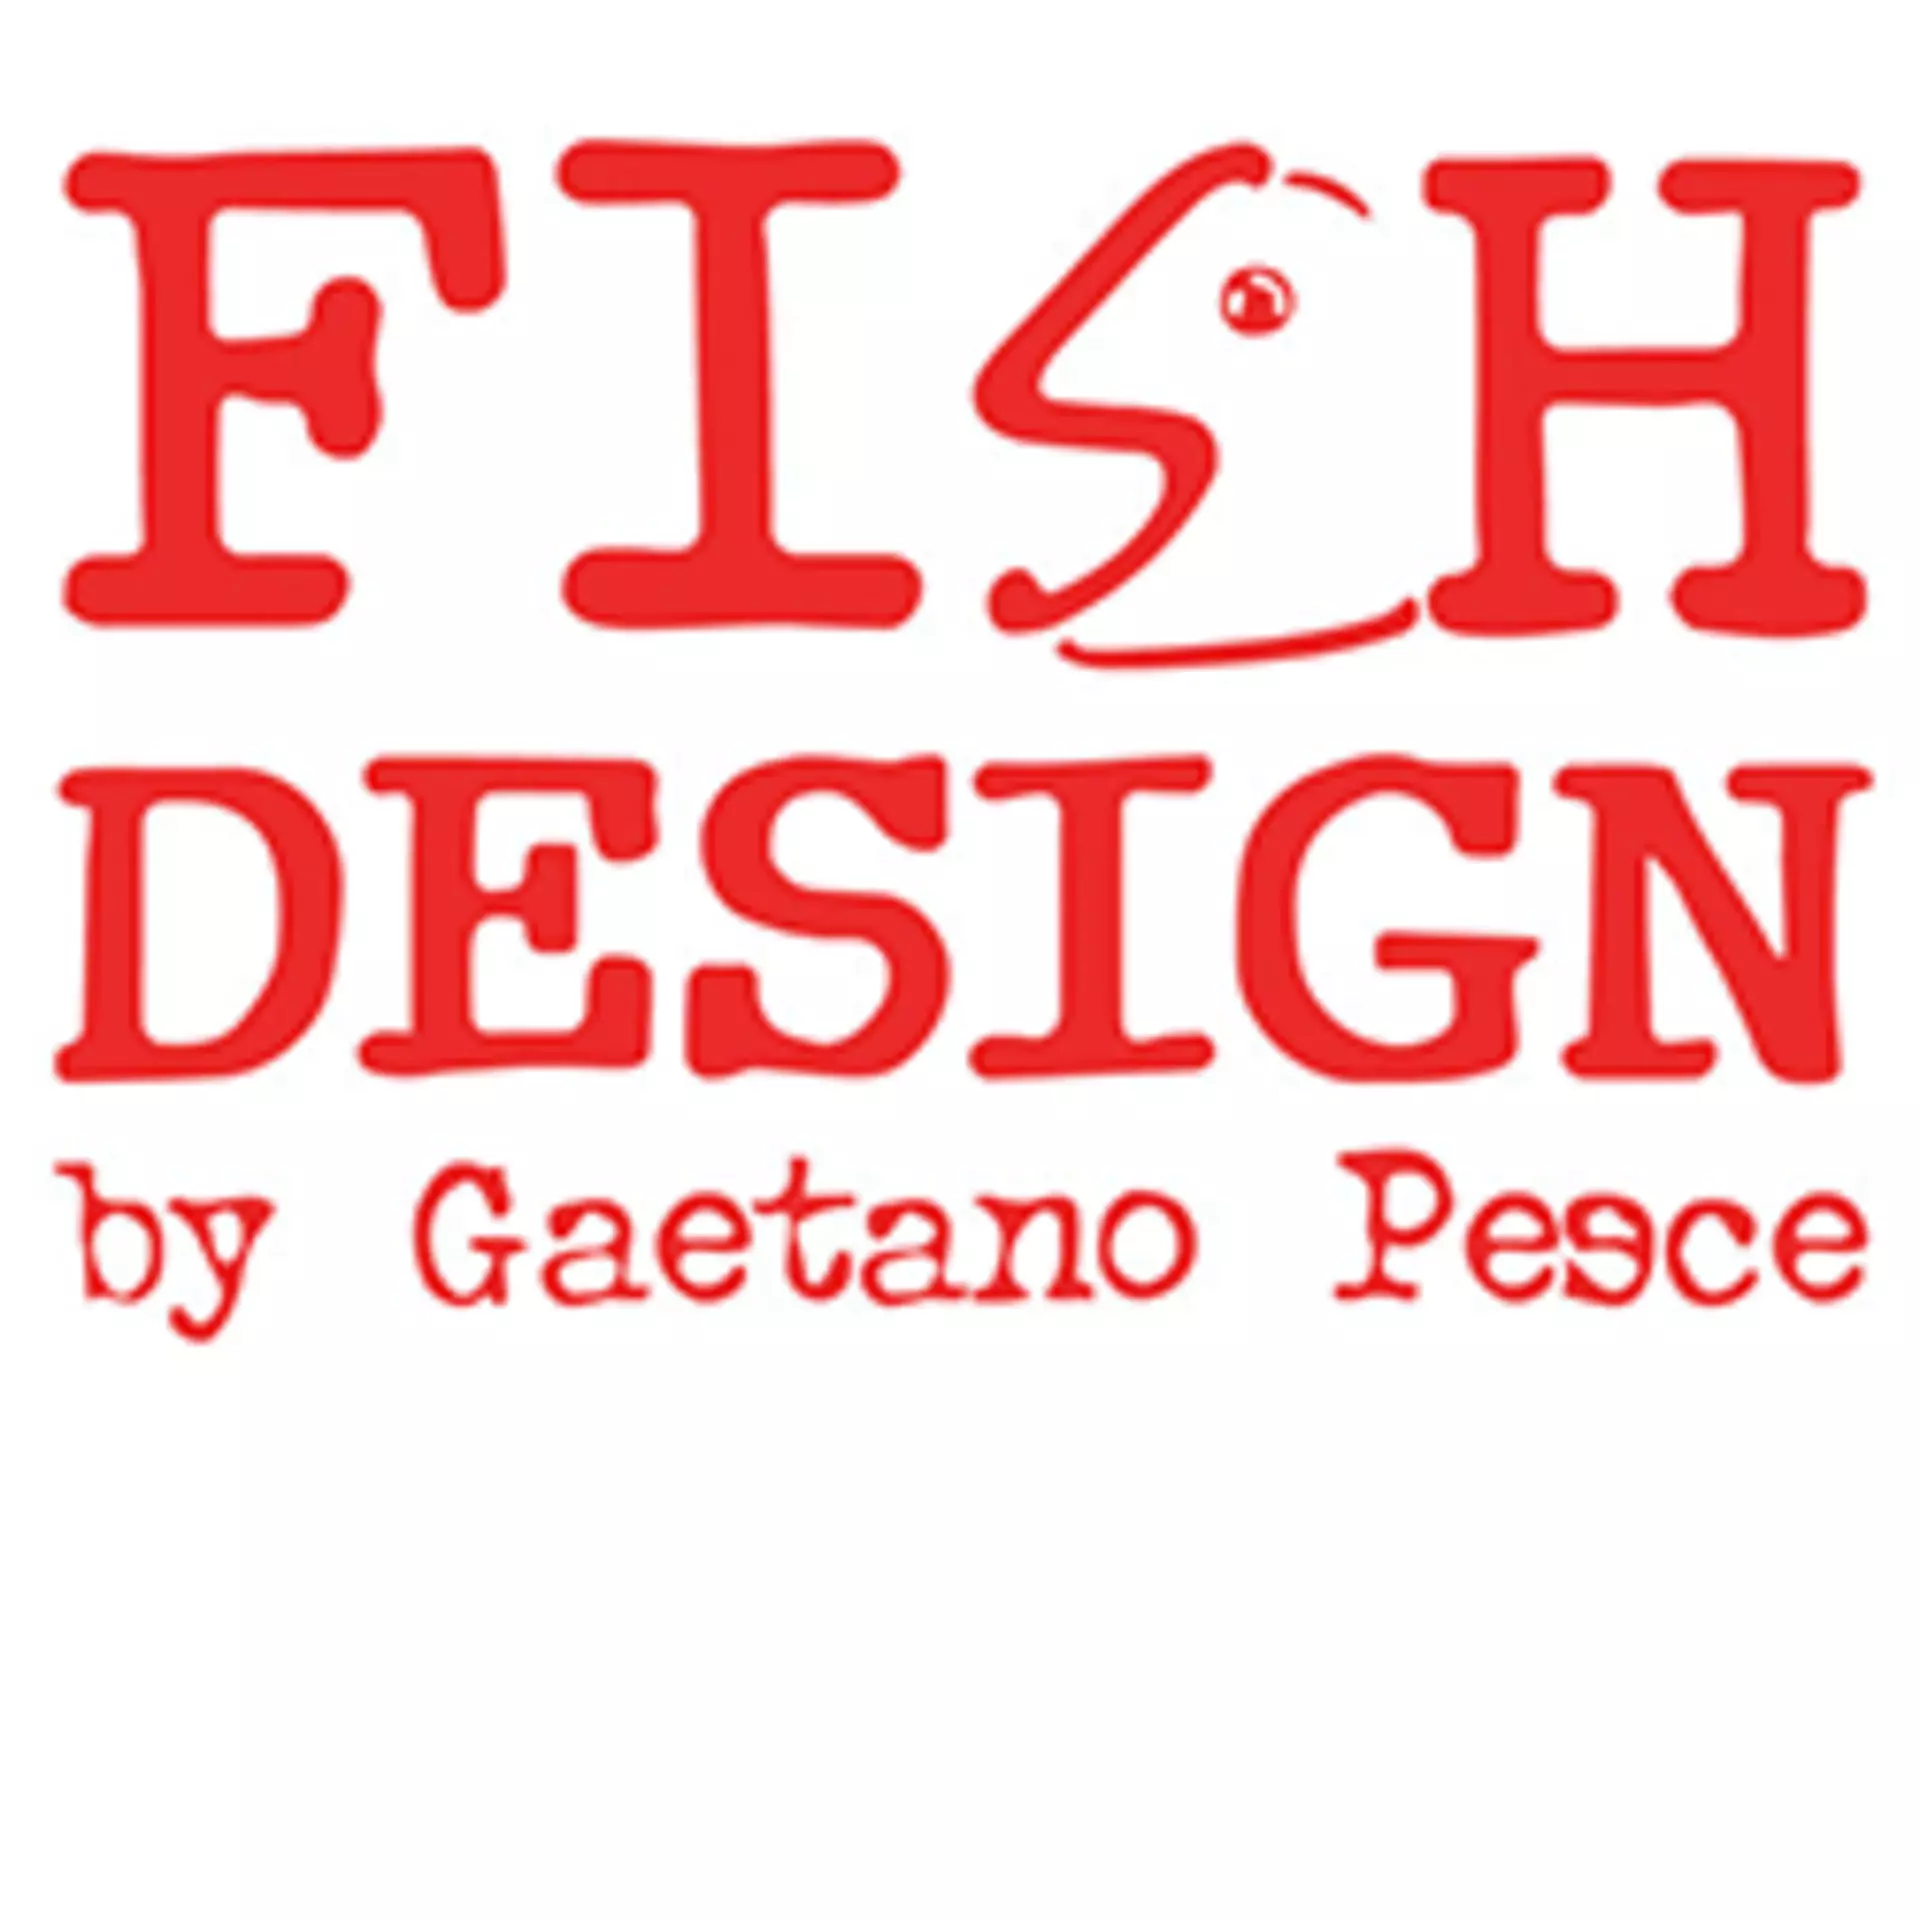 Markenlogo zu Fish Design by Gaetano Pesce